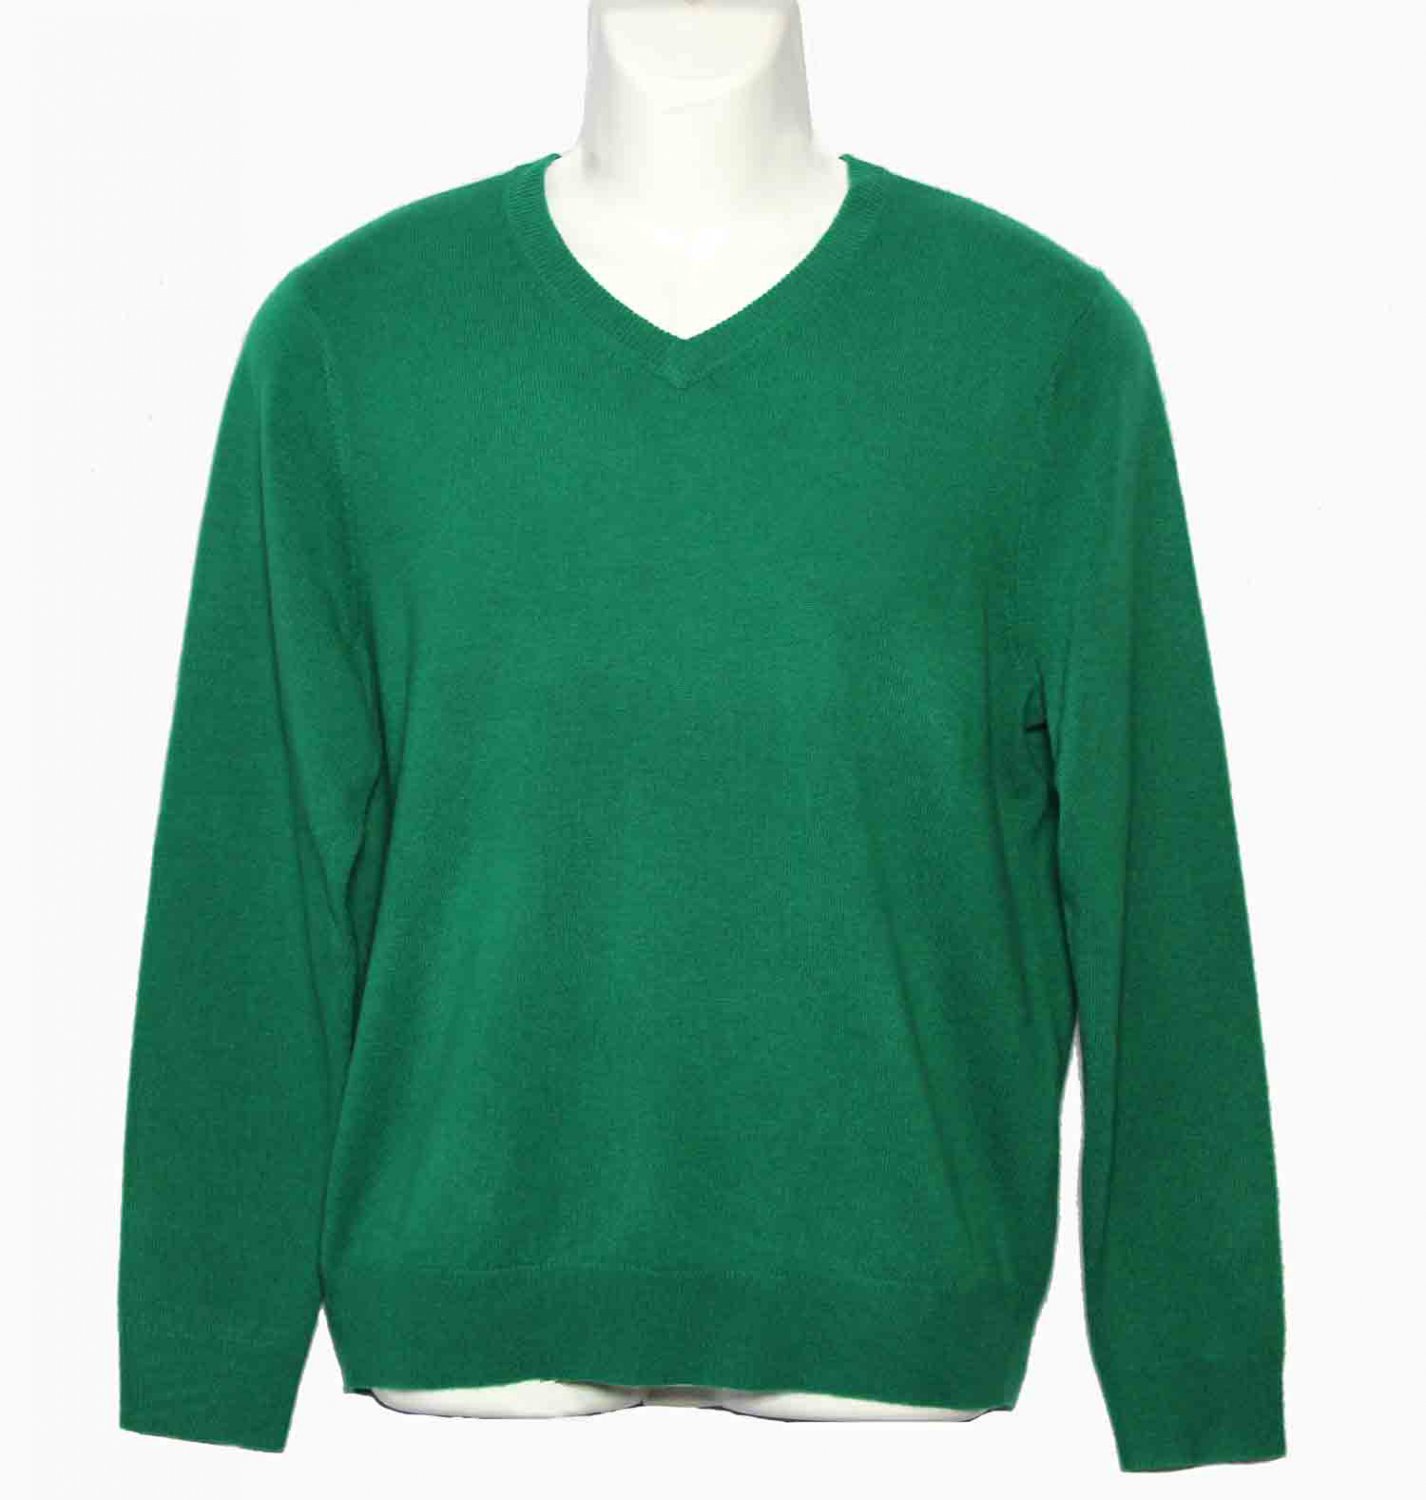 Vineyard Vines Sweater Cashmere Blend Green Holly V-Neck Men's Size Small